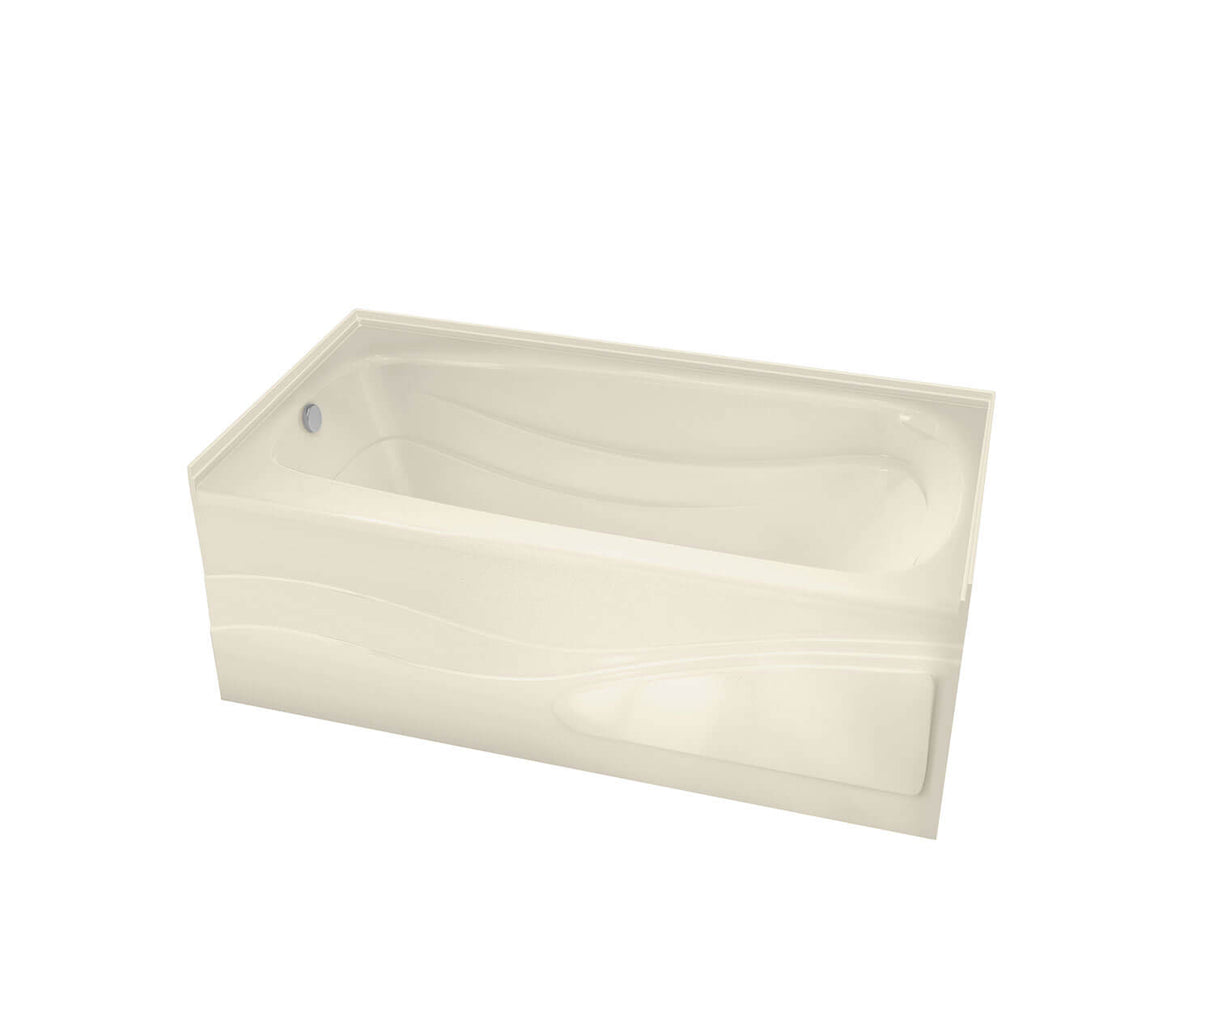 MAAX 102205-L-097-004 Tenderness 6042 Acrylic Alcove Left-Hand Drain Combined Whirlpool & Aeroeffect Bathtub in Bone